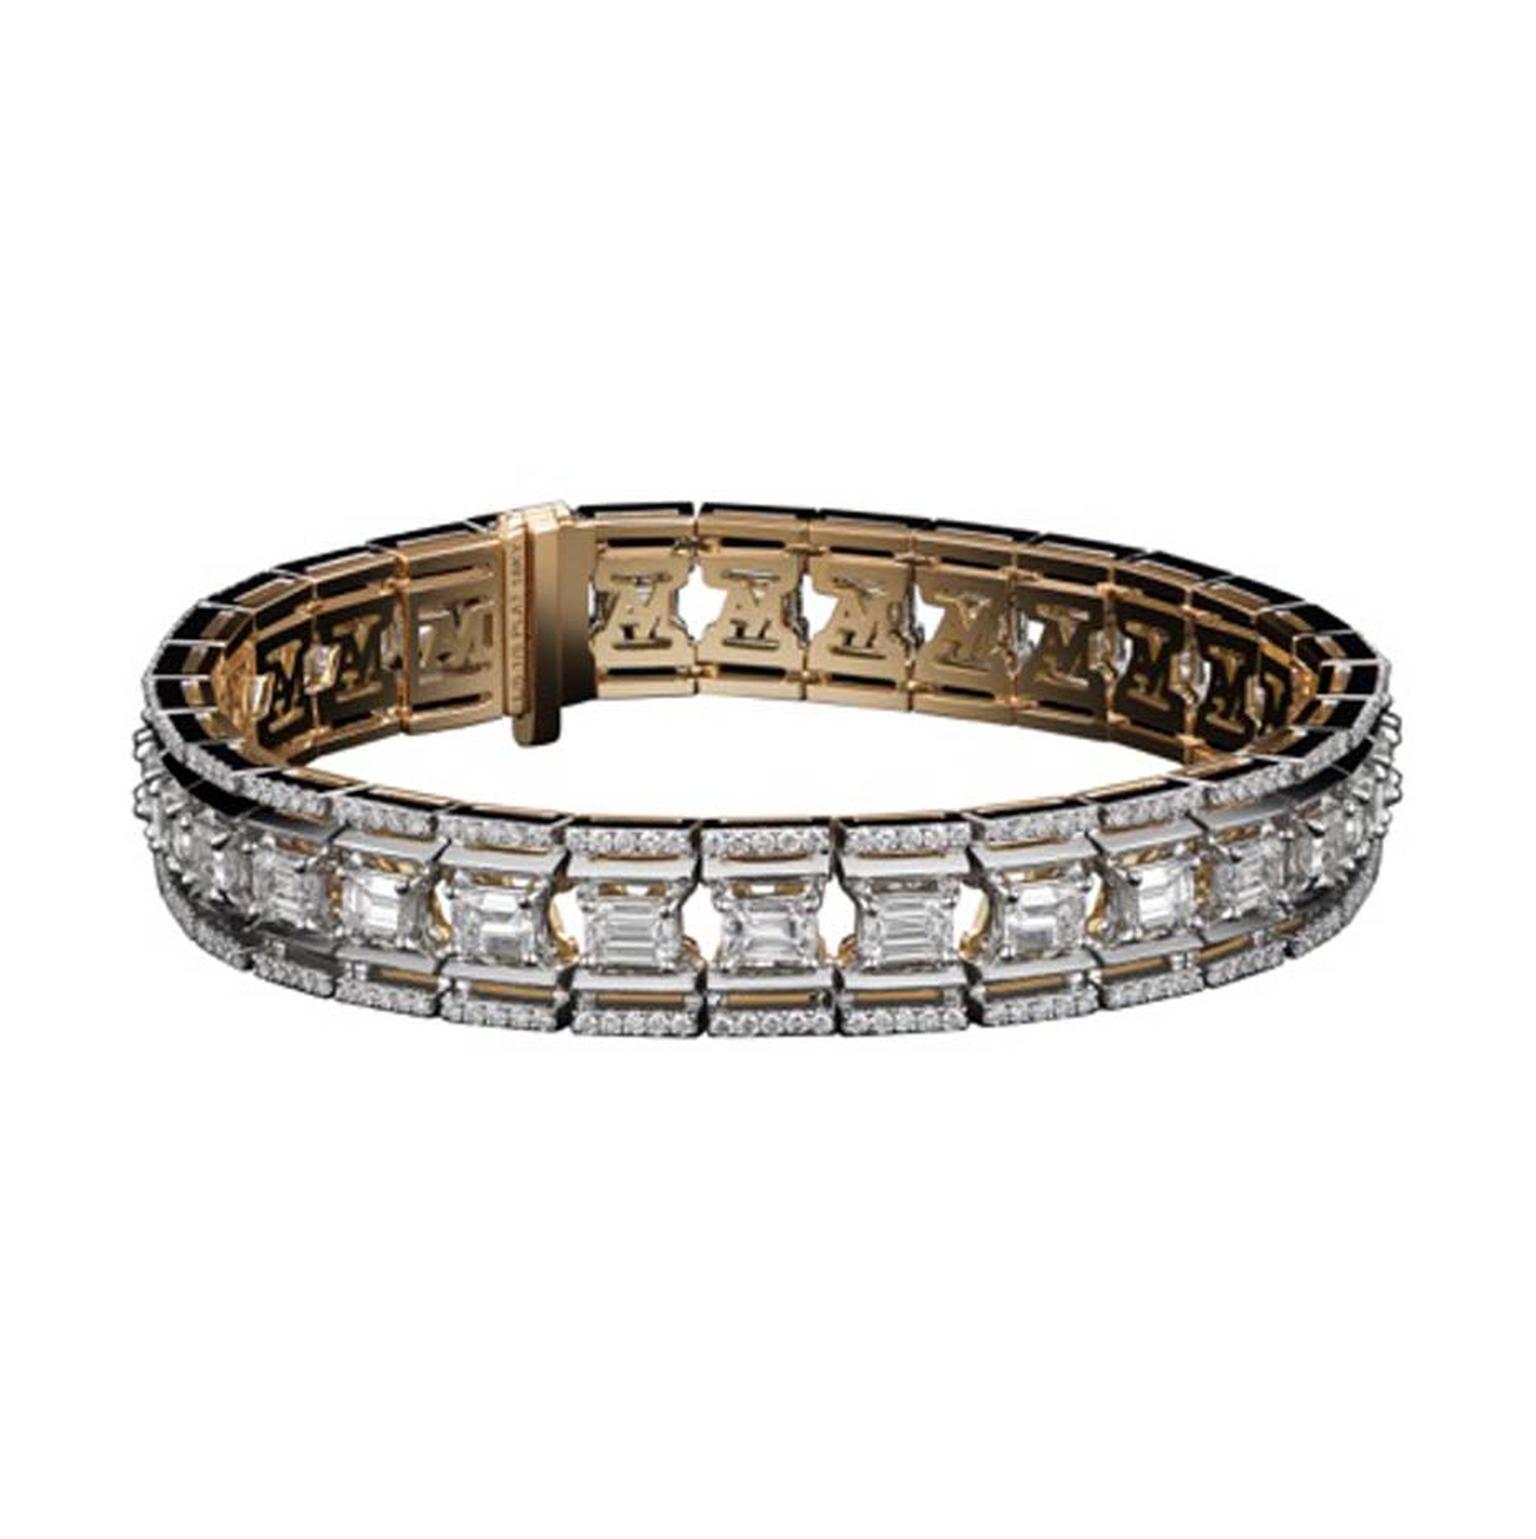 Alexandra Mor emerald-cut Platform diamond bracelet in white and black gold.